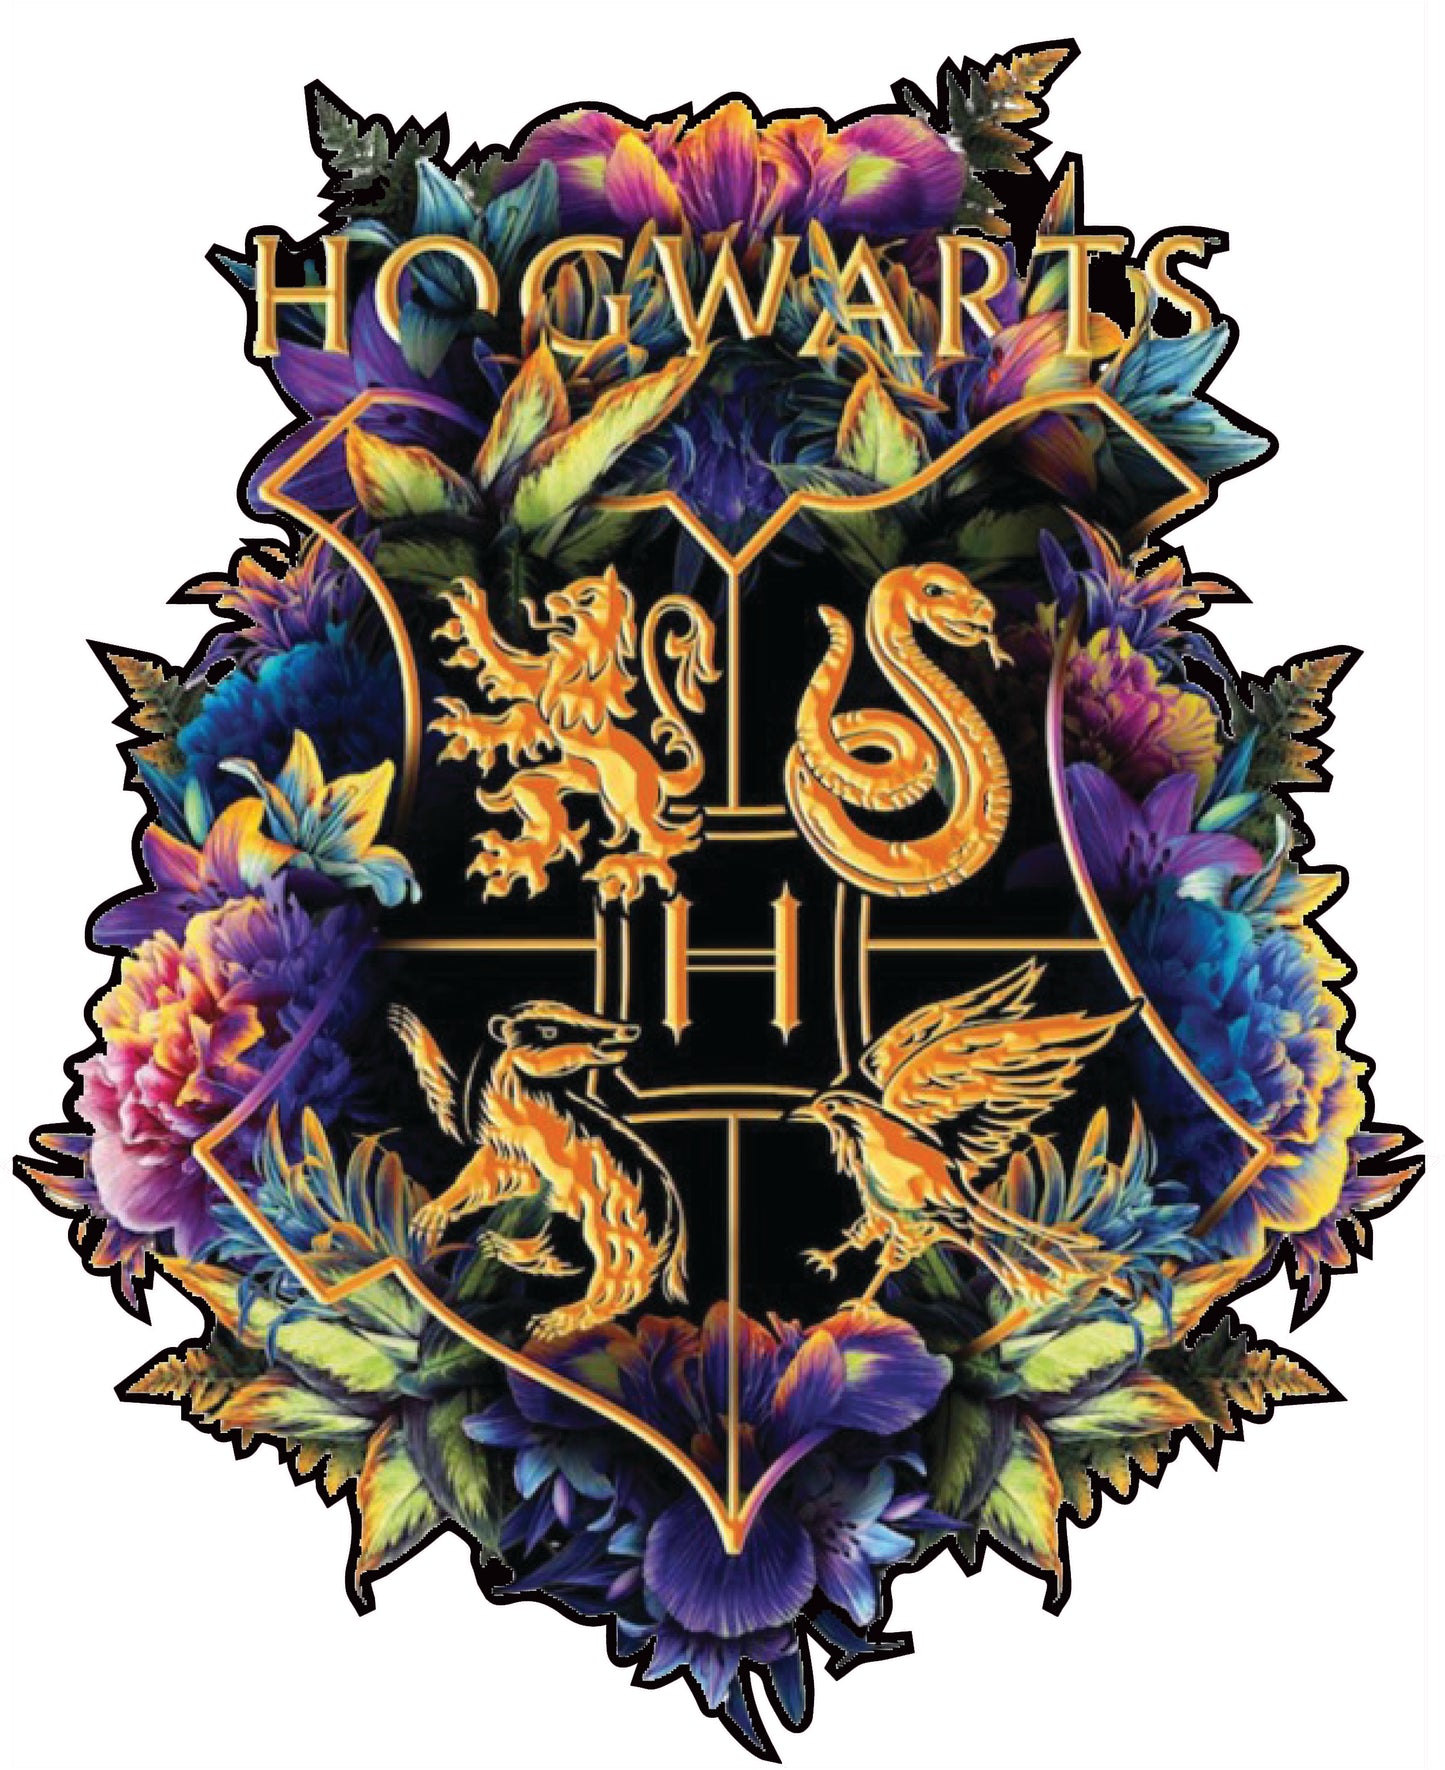 Hogwarts - Adhesive Vinyl Decal